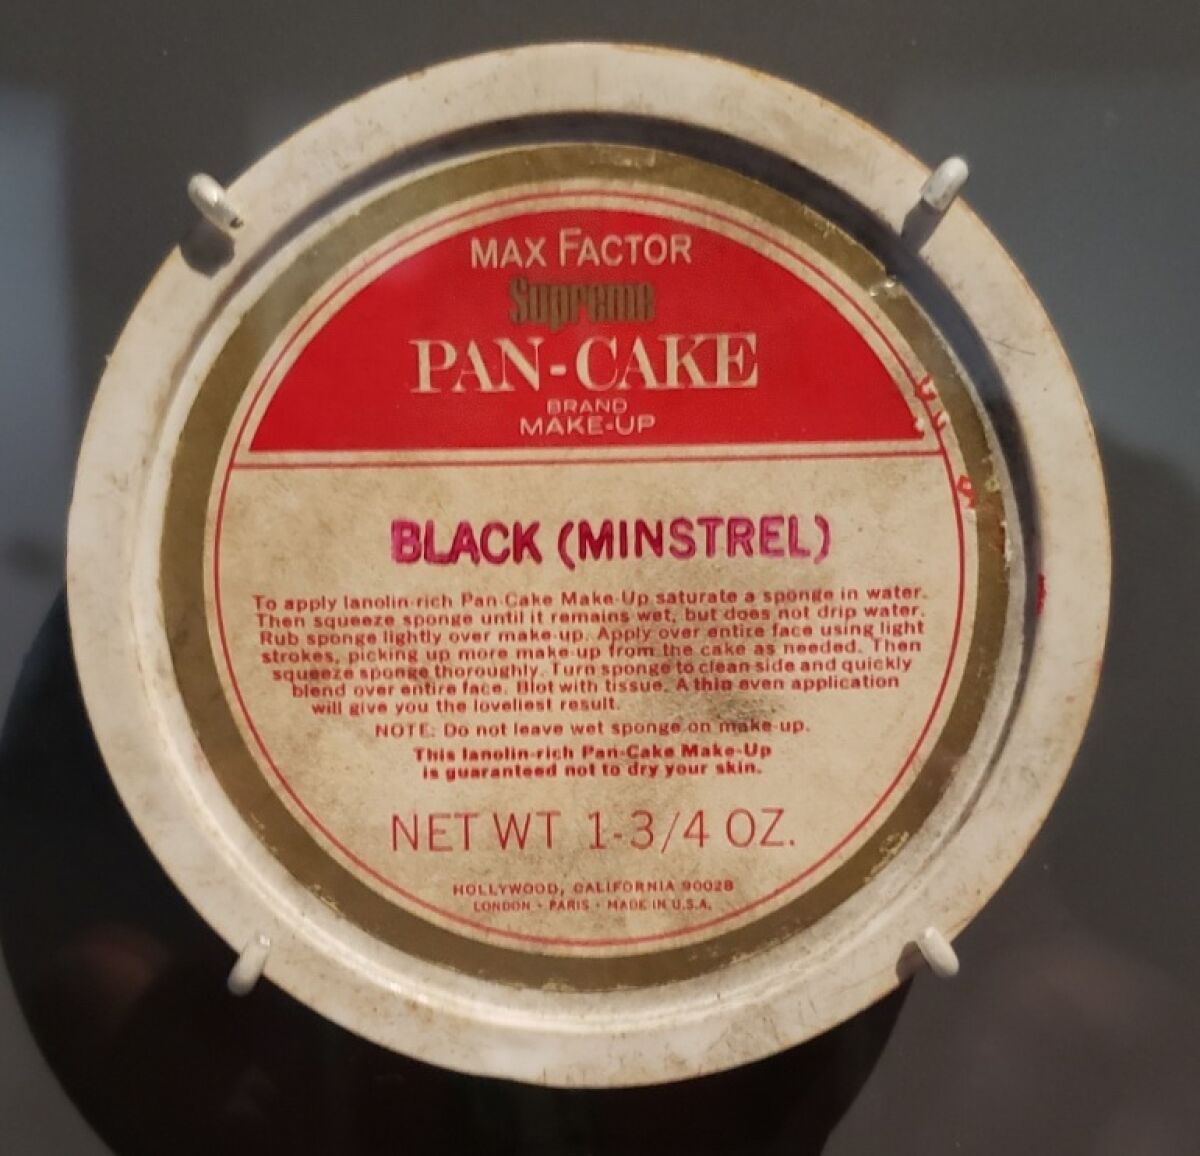 The label on a vintage tin of makeup labels it as "Black (Minstrel)."